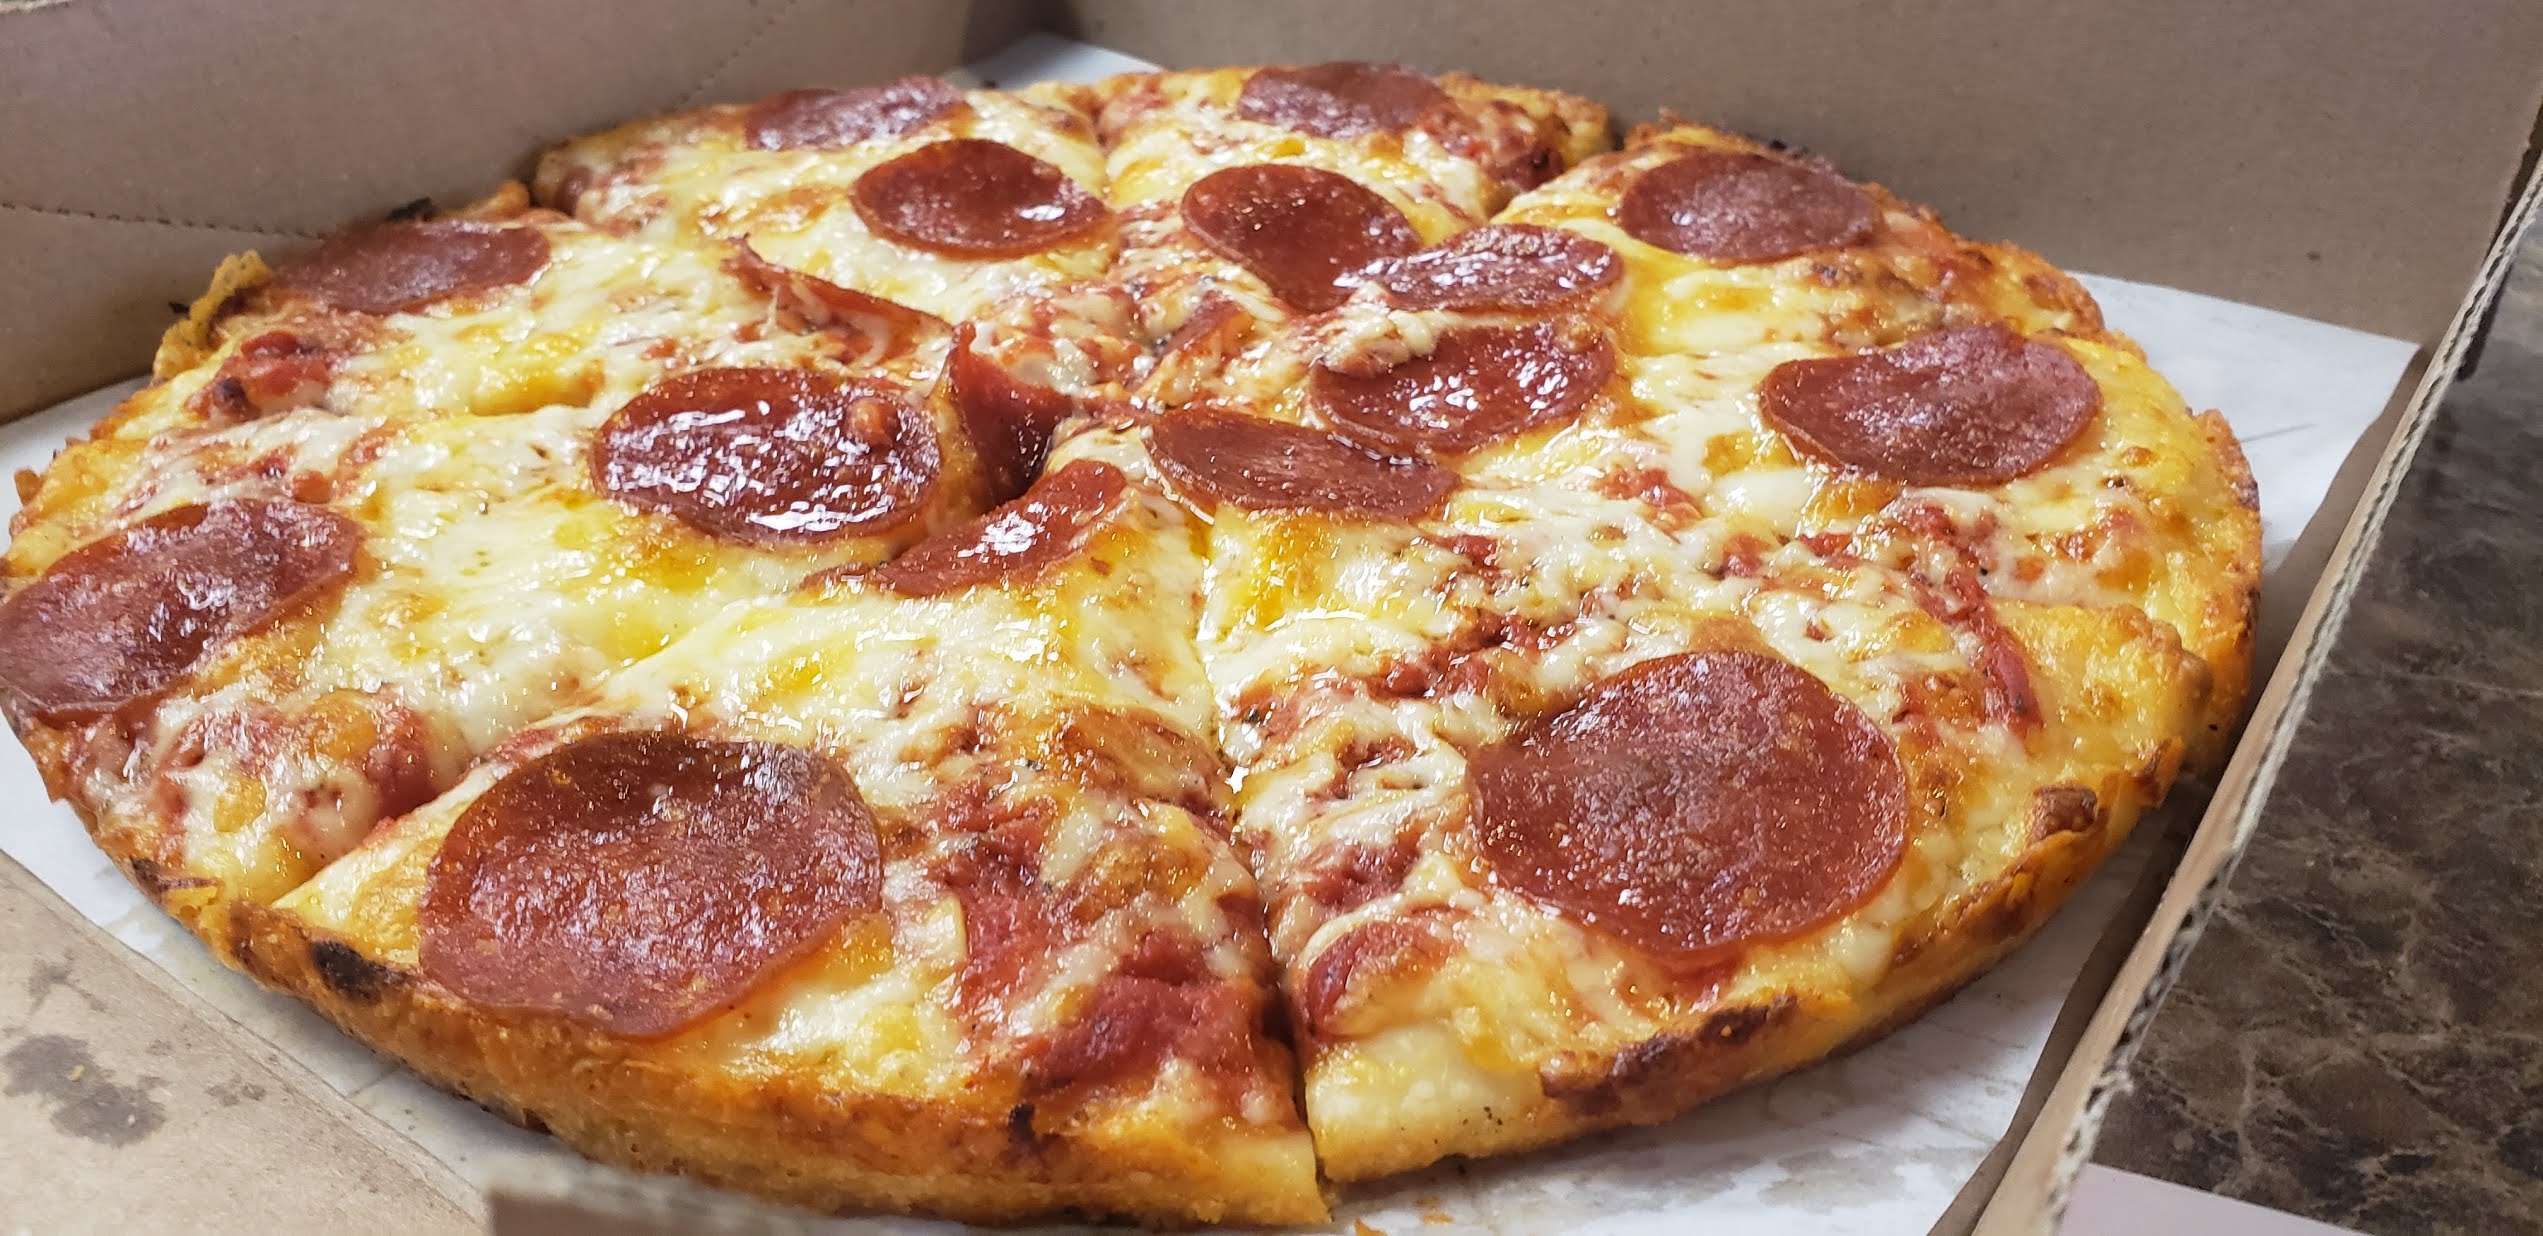 Pizza by Pappas - Scranton | NEPA Pizza Review